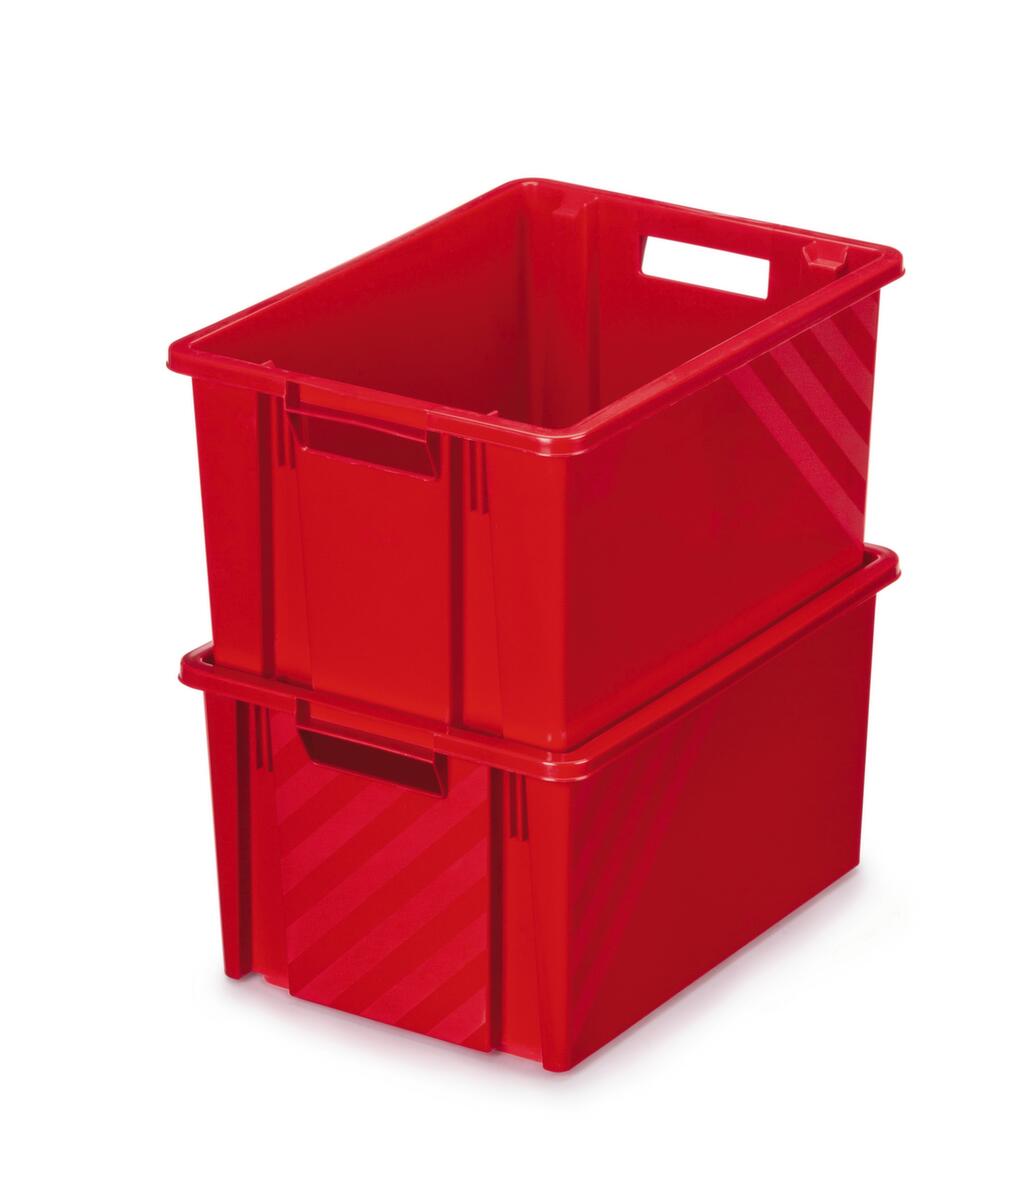 Drehstapelbehälter, rot, Inhalt 18 l Standard 1 ZOOM